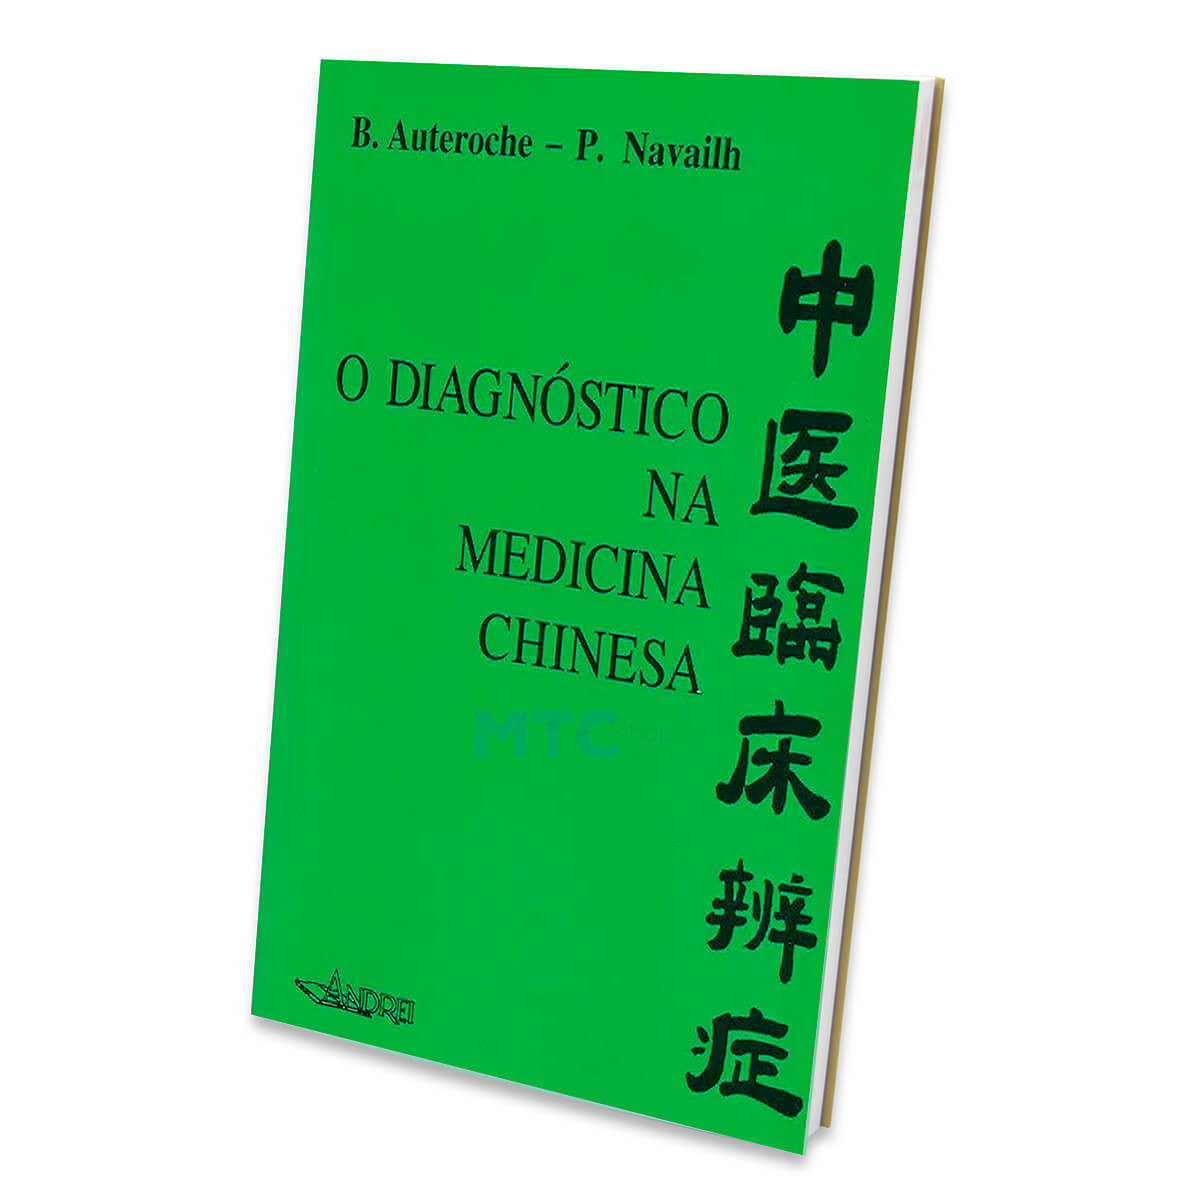 O Diagnóstico na Medicina Chinesa - Ed. Andrei